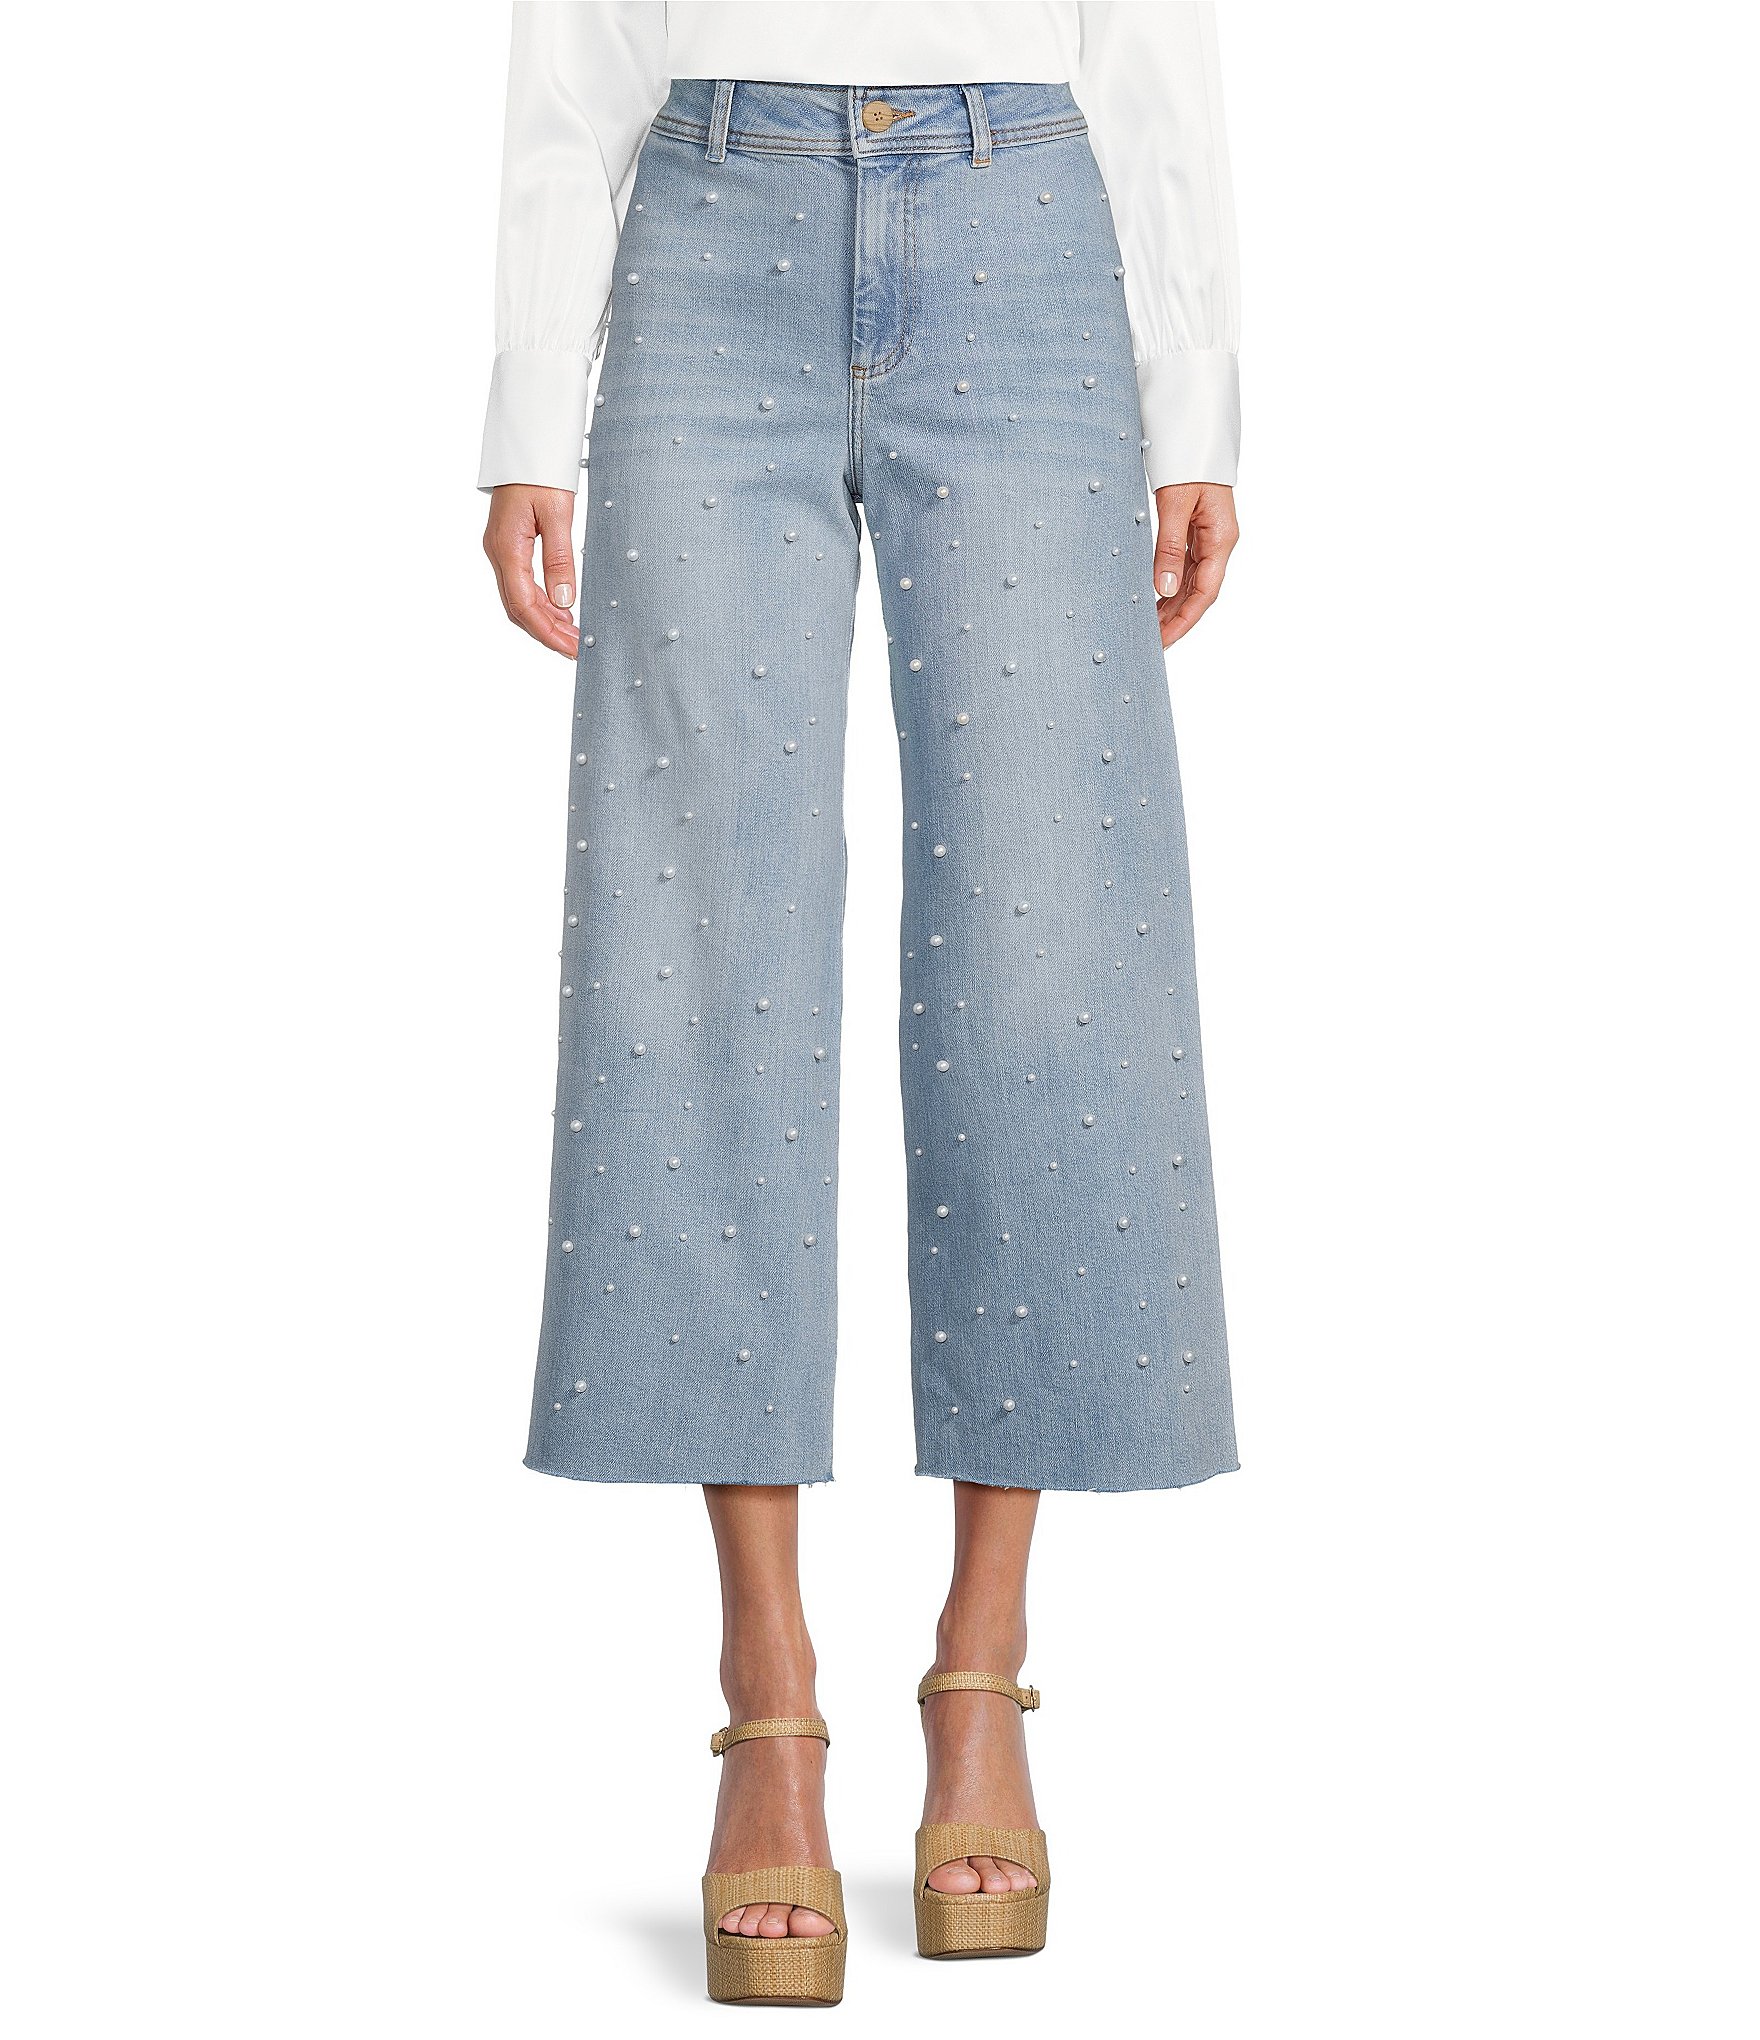 Calvin Klein Scuba Crepe Stand Collar 3/4 Sleeves Button Front Jacket &  Scuba Crepe Front Pocket Wide Leg Pants